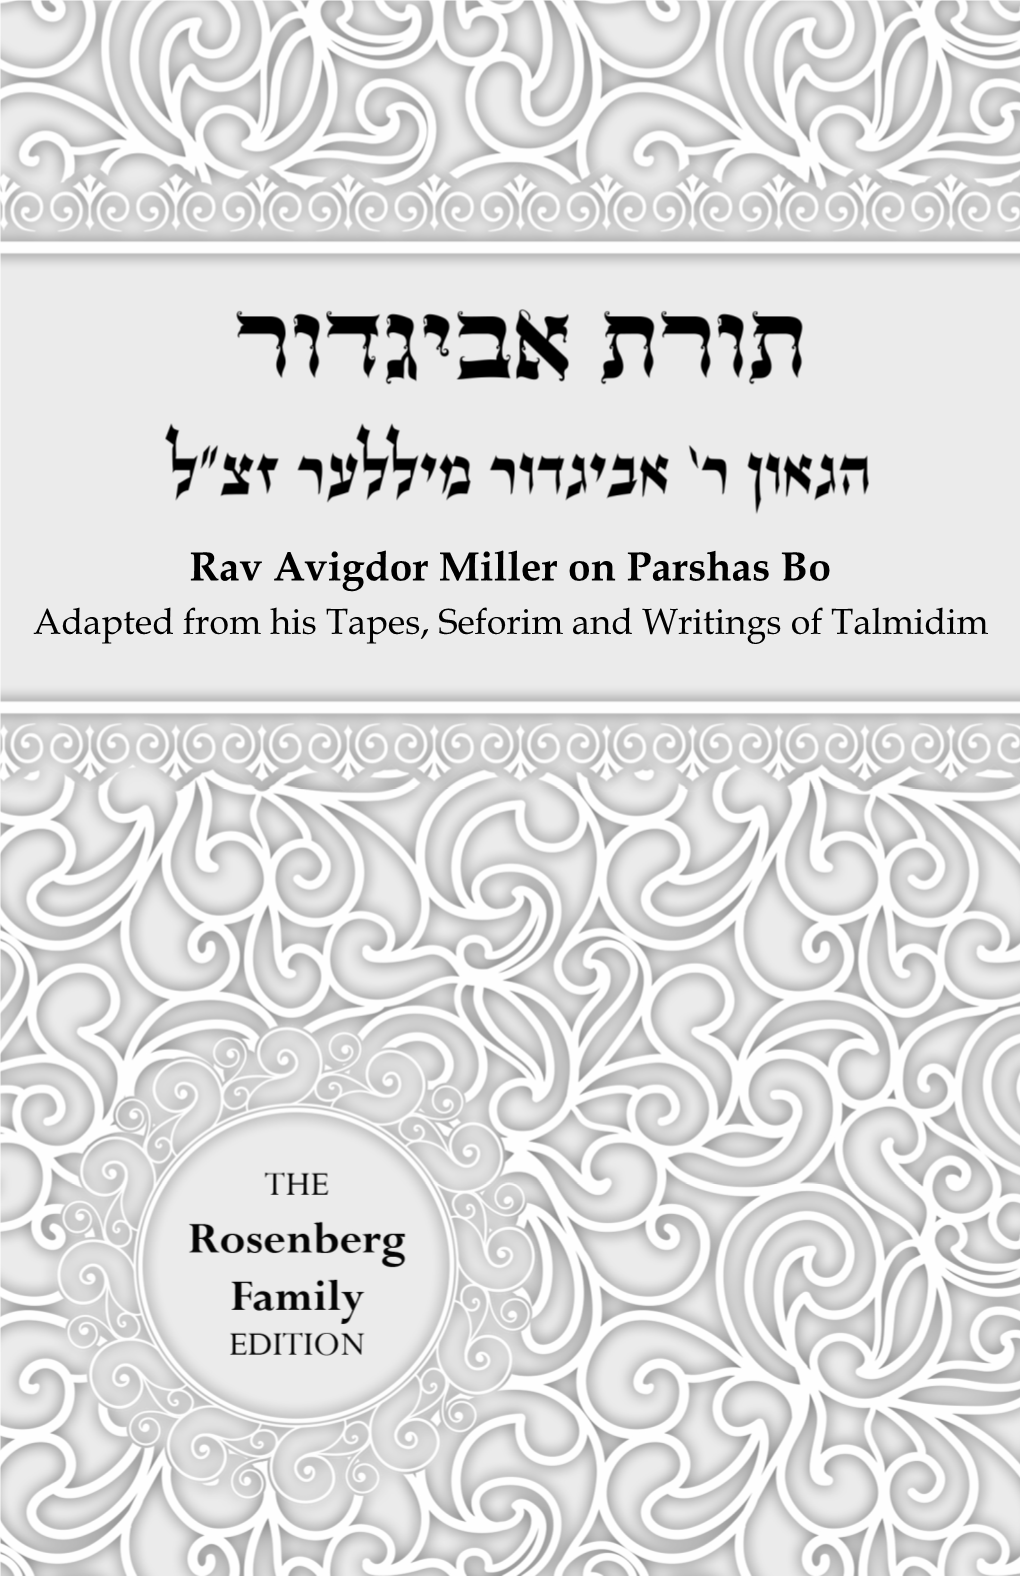 Rav Avigdor Miller on Parshas Bo Adapted from His Tapes, Seforim and Writings of Talmidim